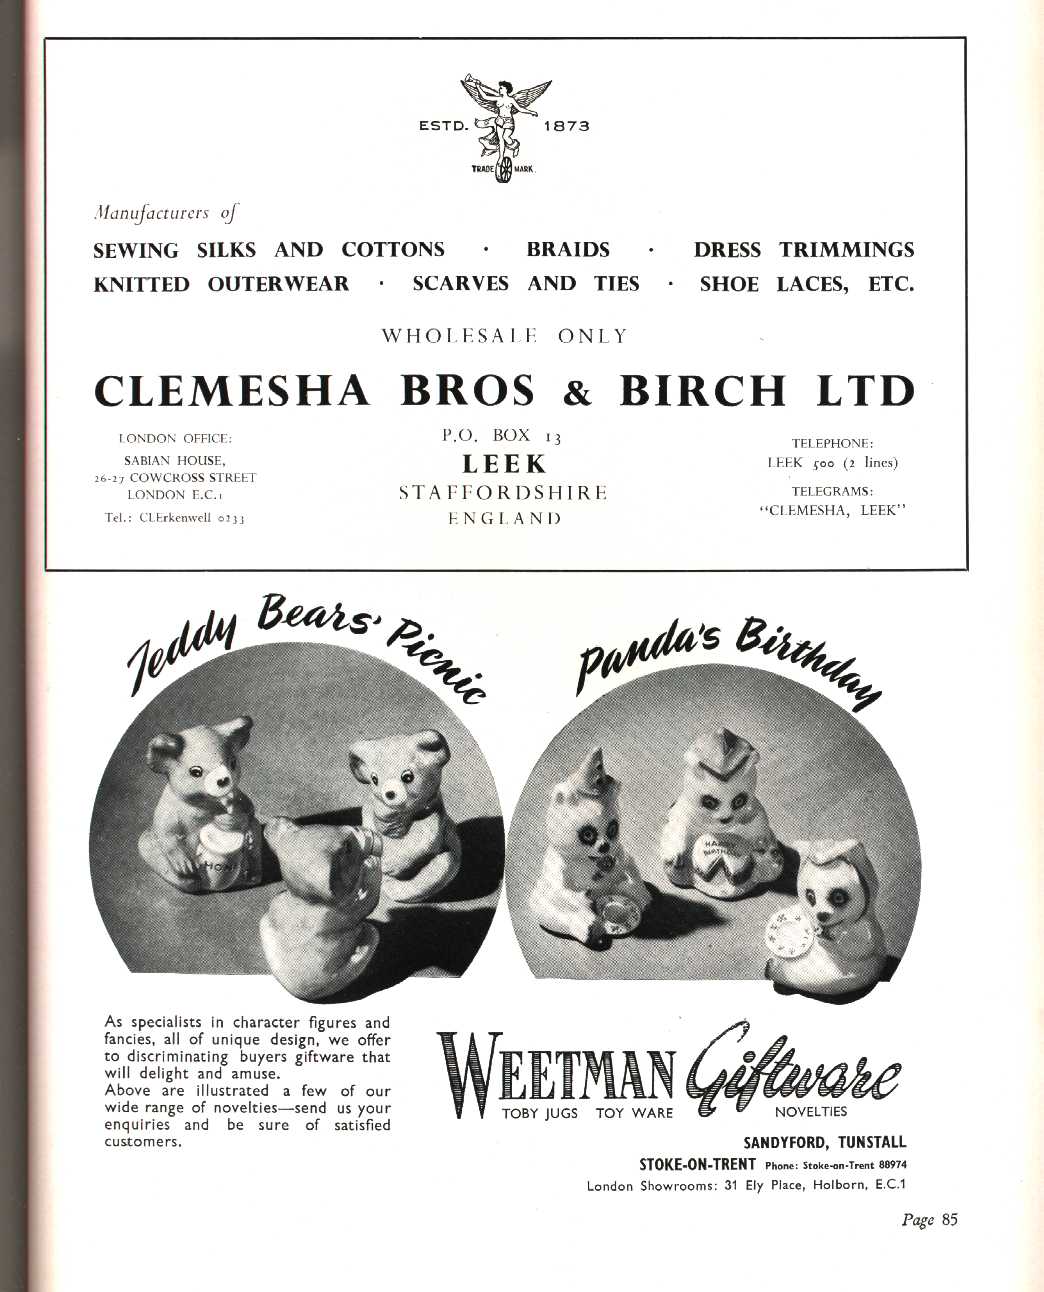 Clemesha Bros & Birch Ltd. (Leek) Textile manufacturer, Weetman Giftware (Tunstall) Toby Jugs, Toy Ware, Novelties